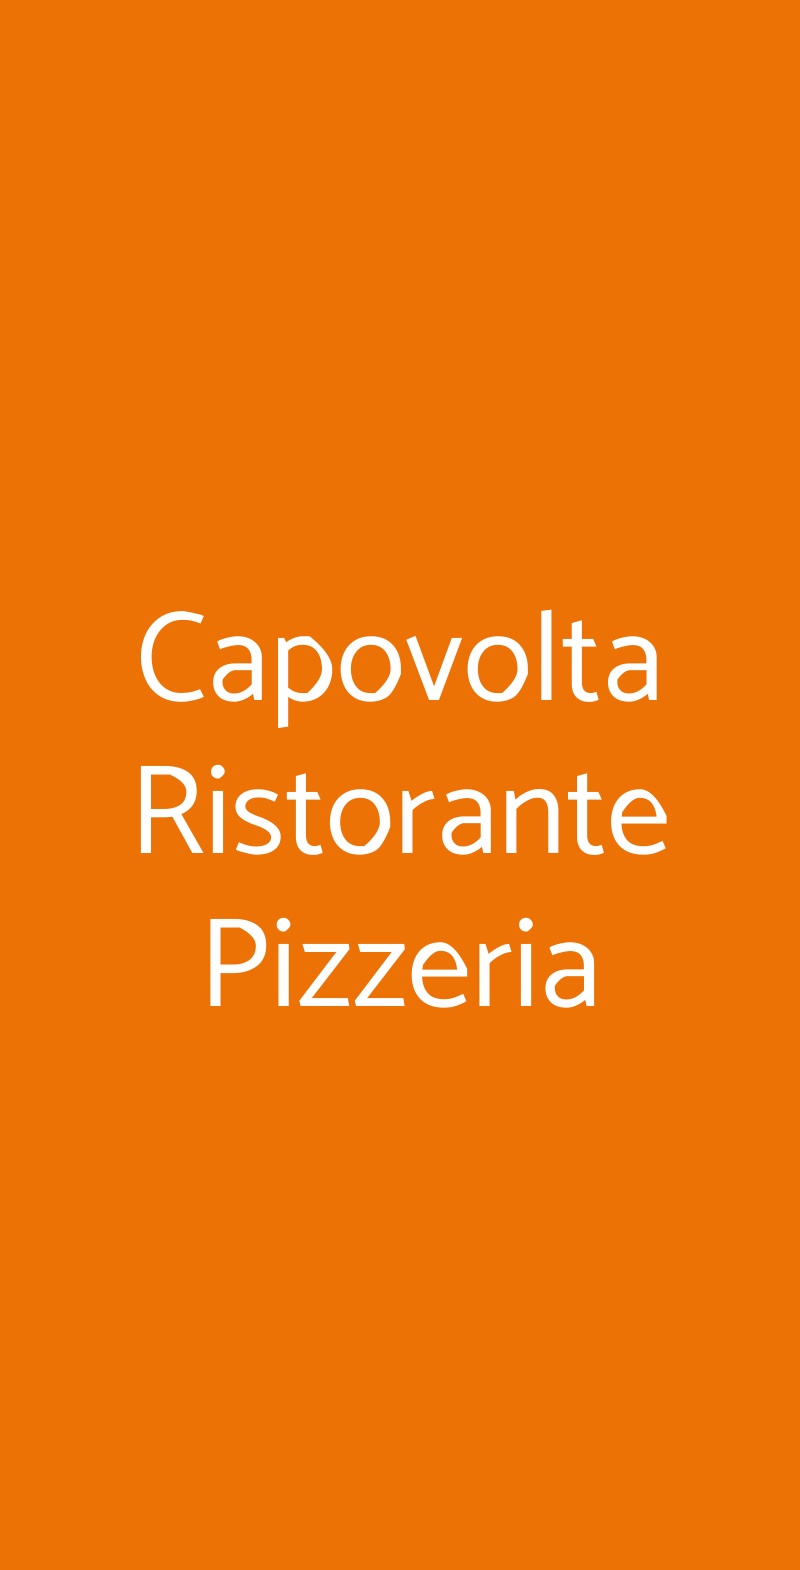 Capovolta Ristorante Pizzeria Padova menù 1 pagina